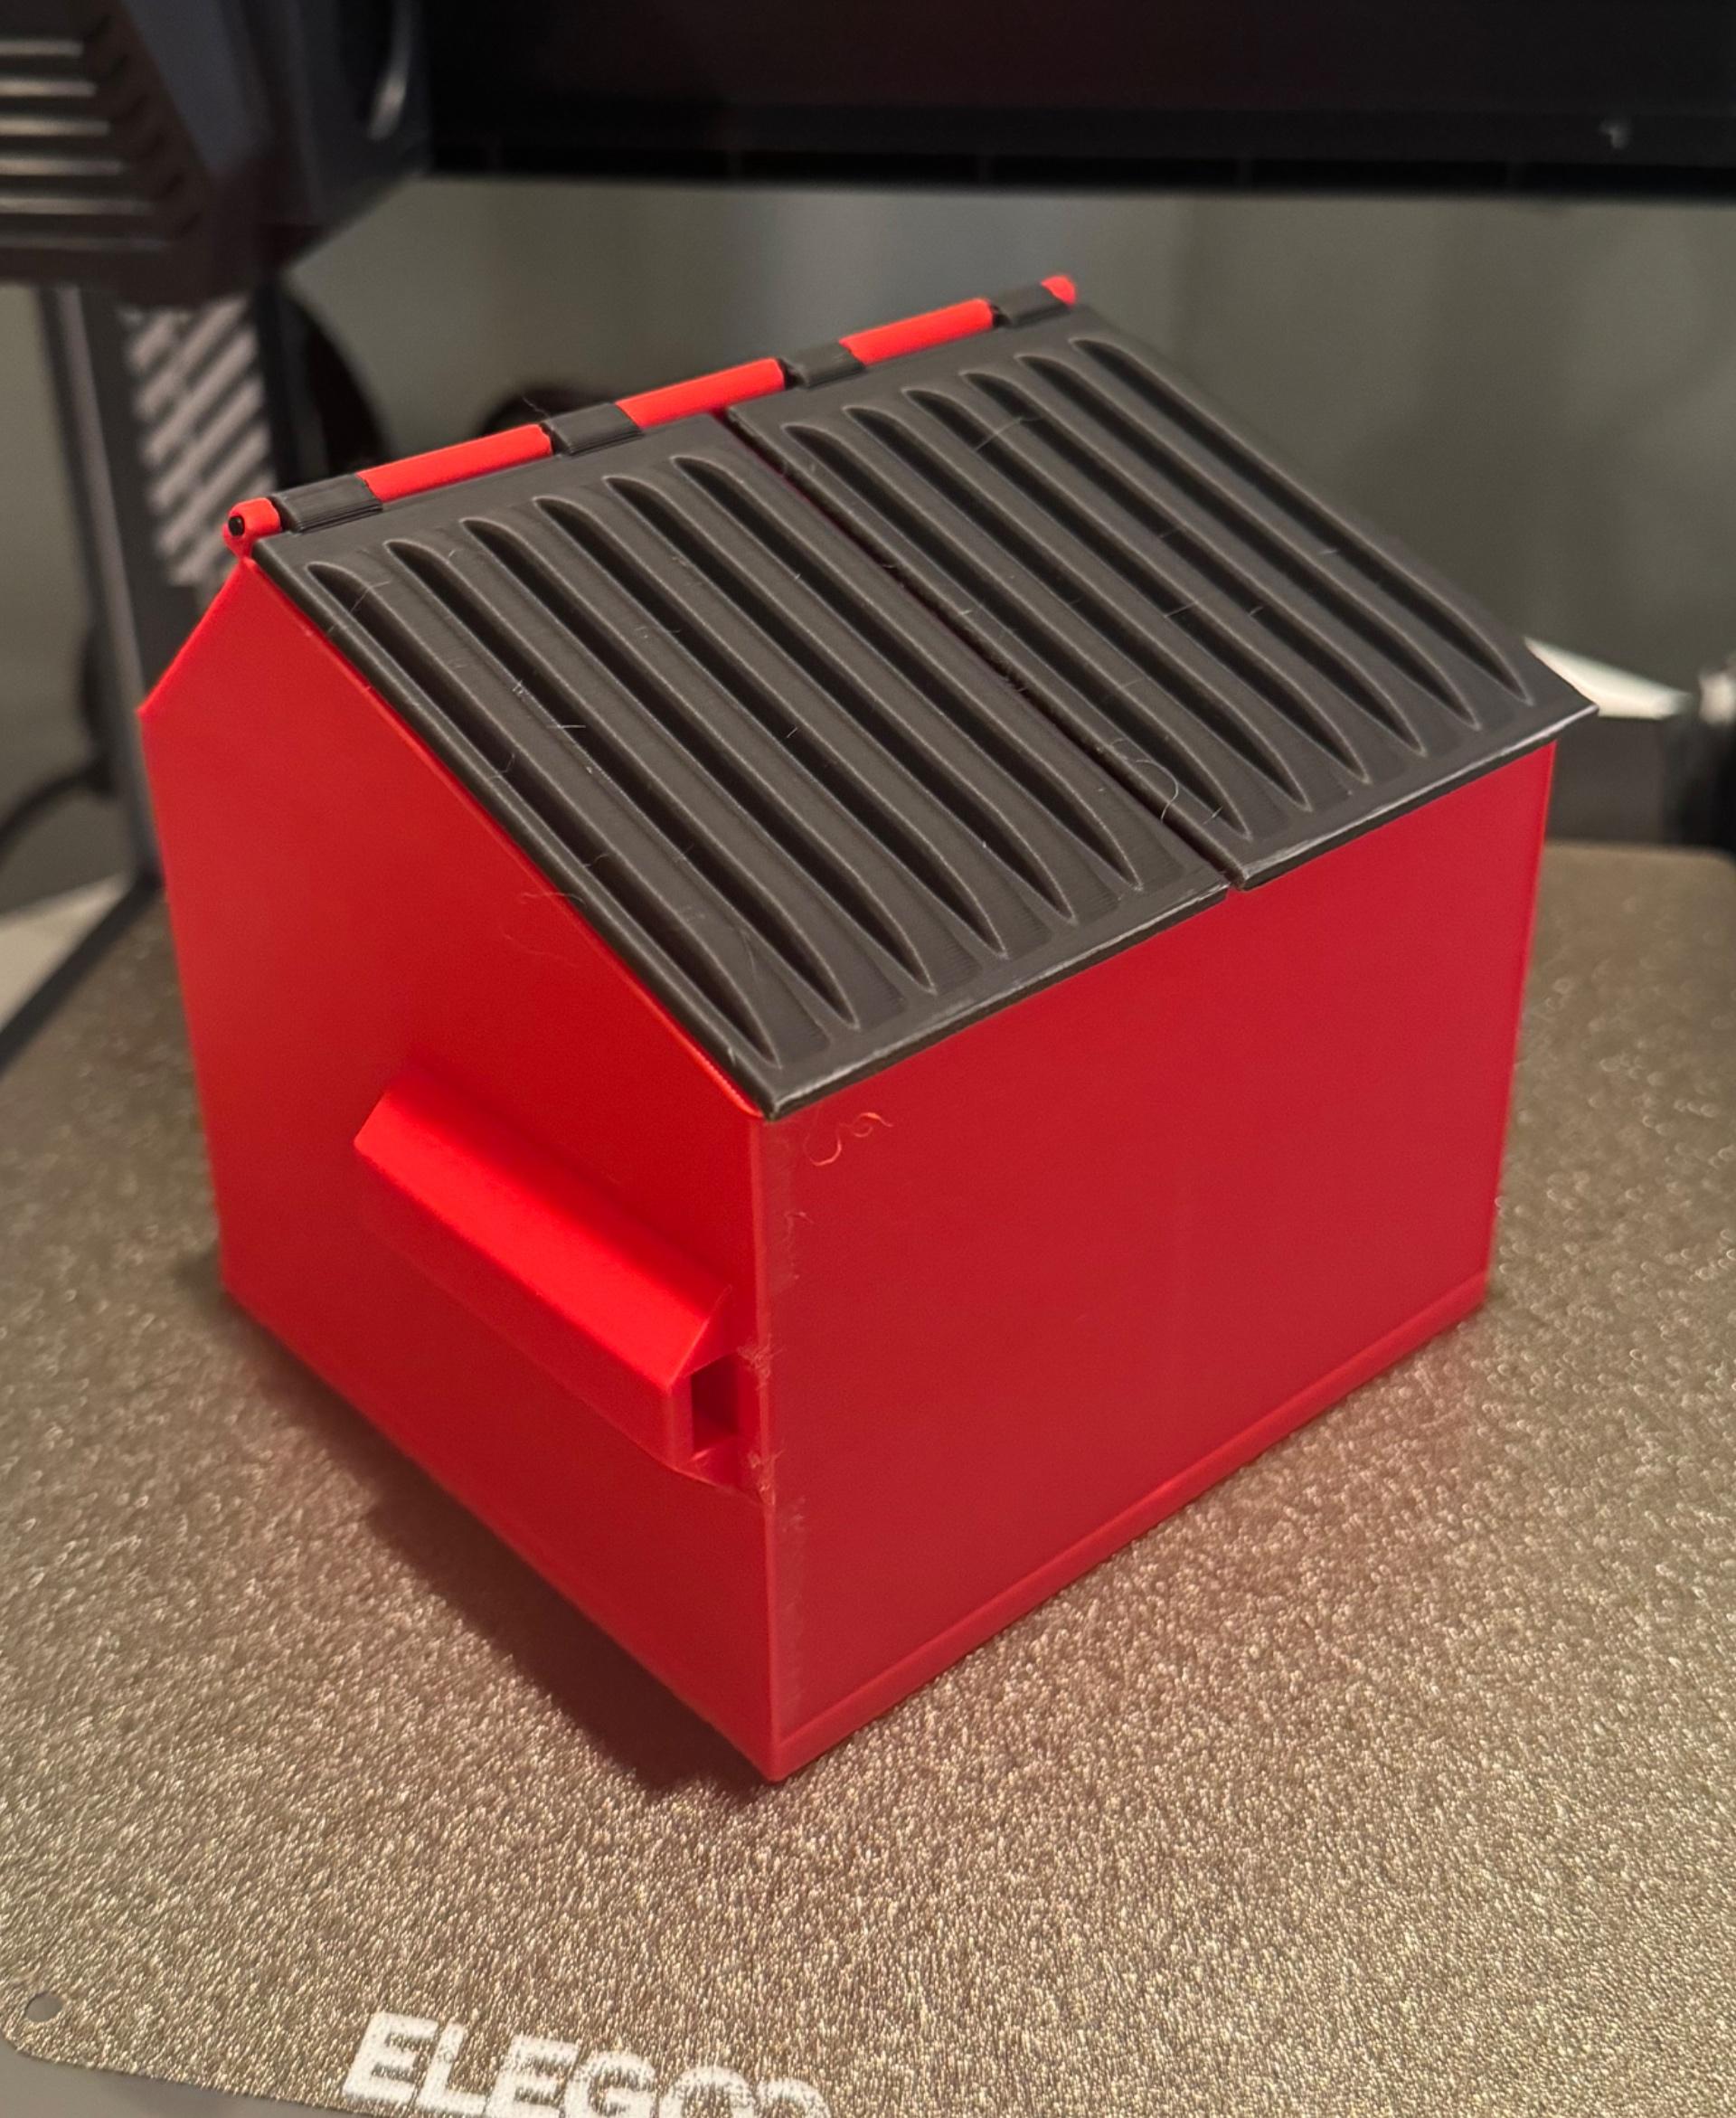 Mini Realistic Dumpster Organizer / Bin - Prints beautifully with matte PLAs! - 3d model